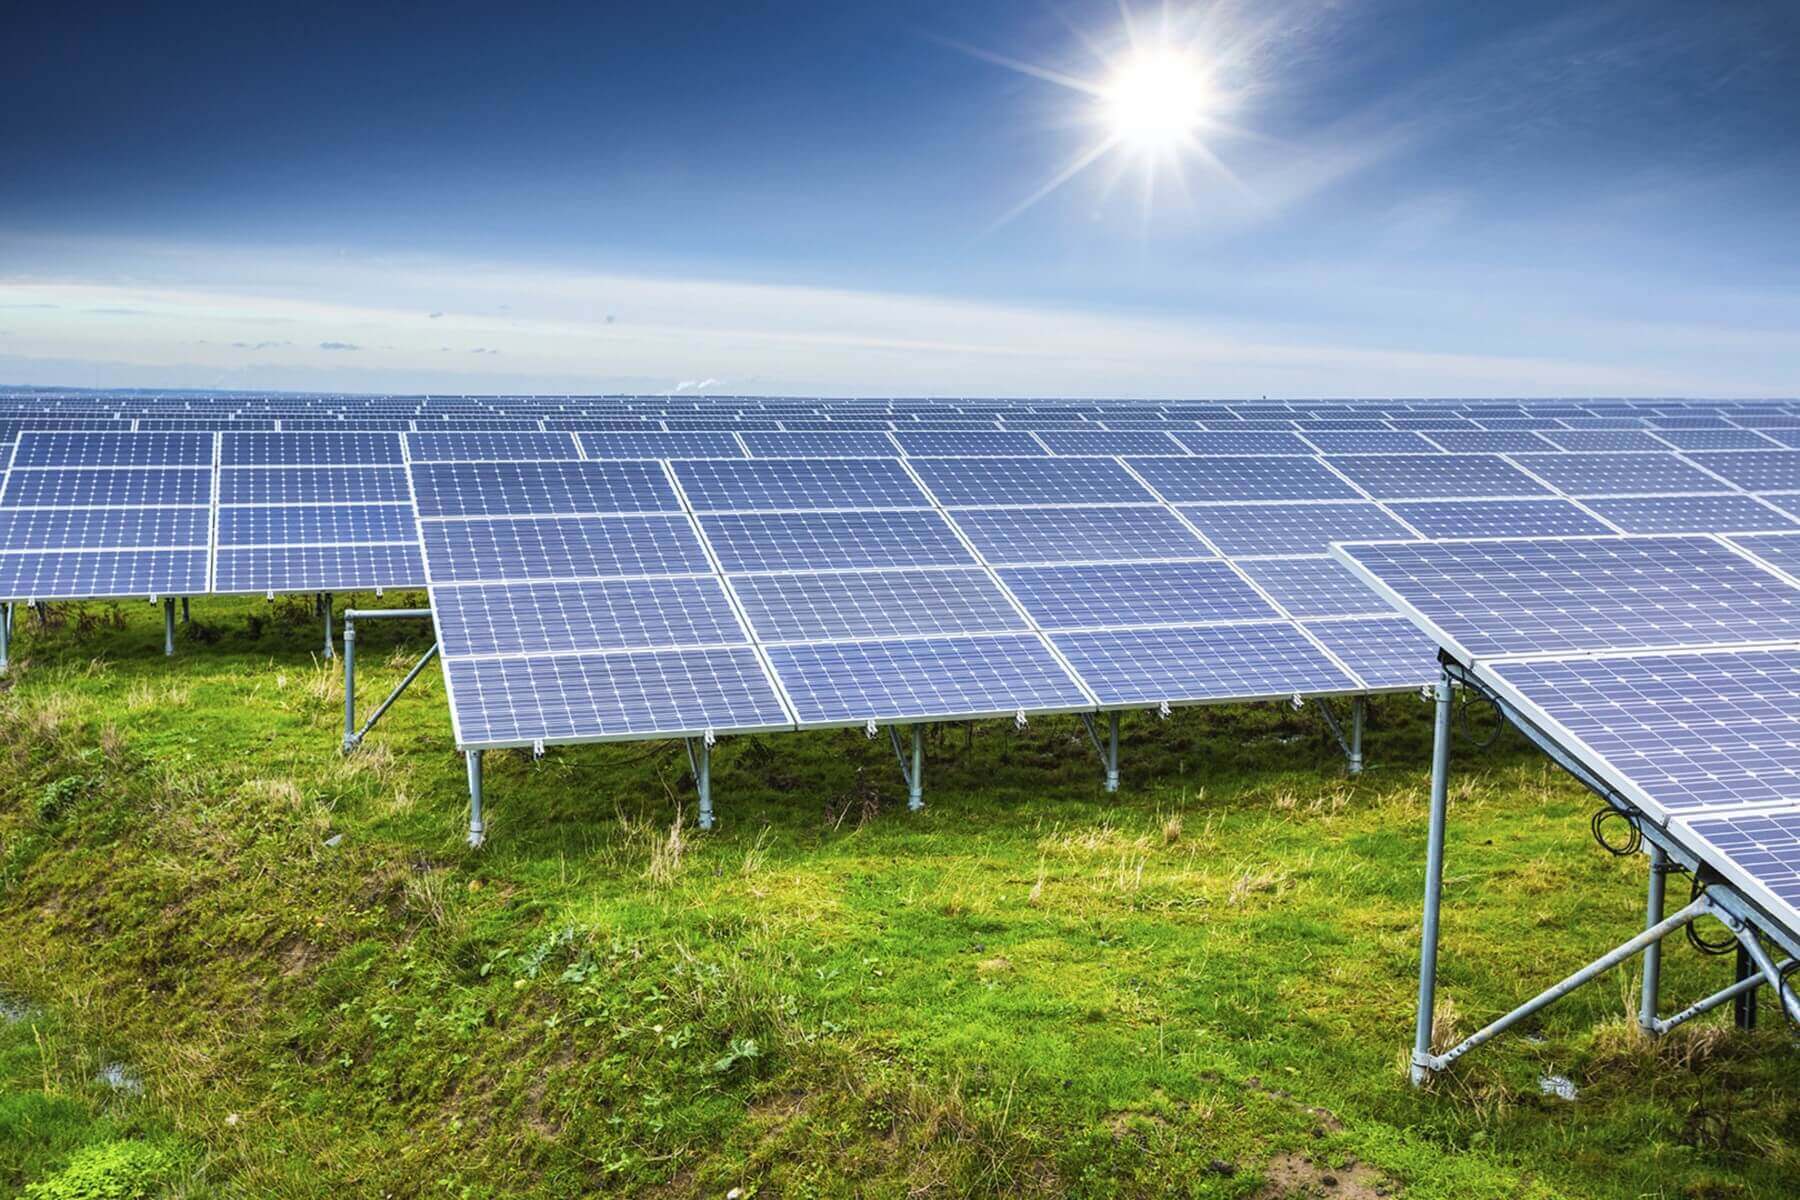 Alberta Solar Farm